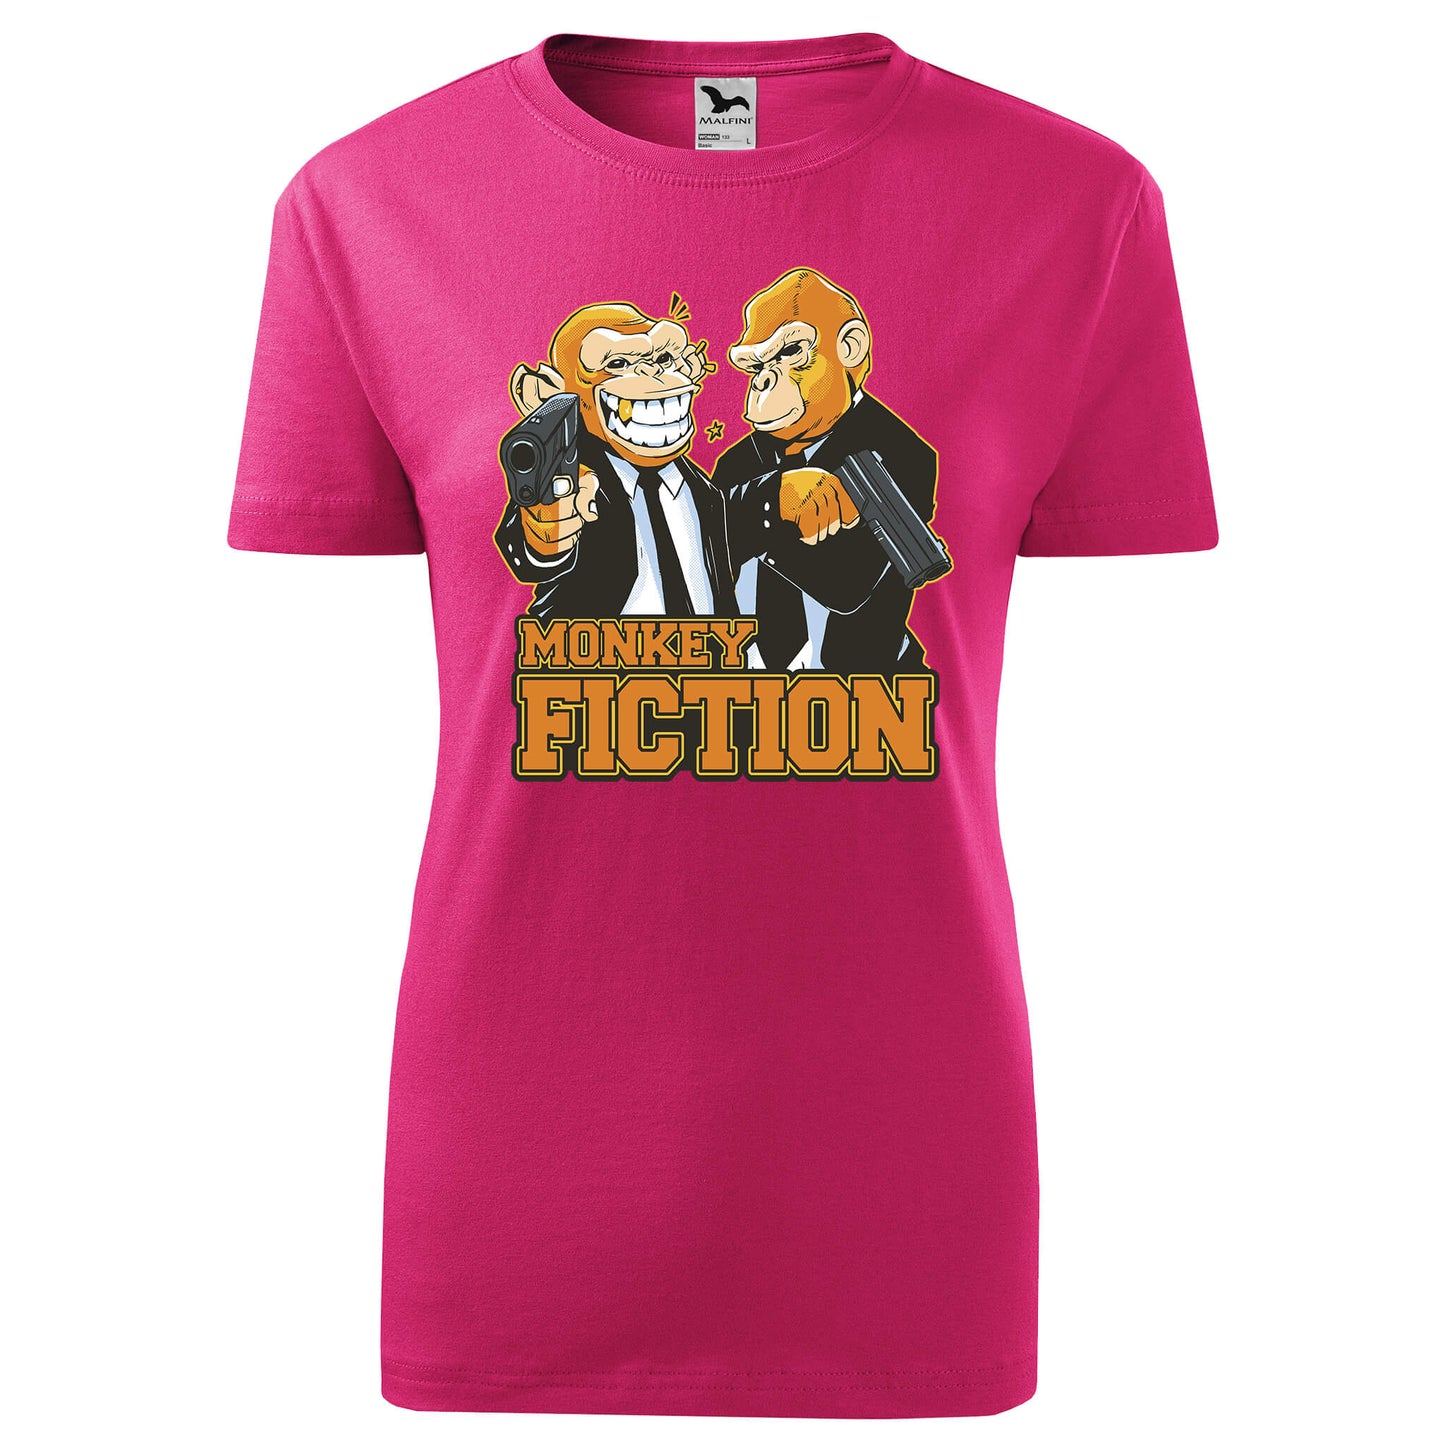 Monkey fiction t-shirt - rvdesignprint